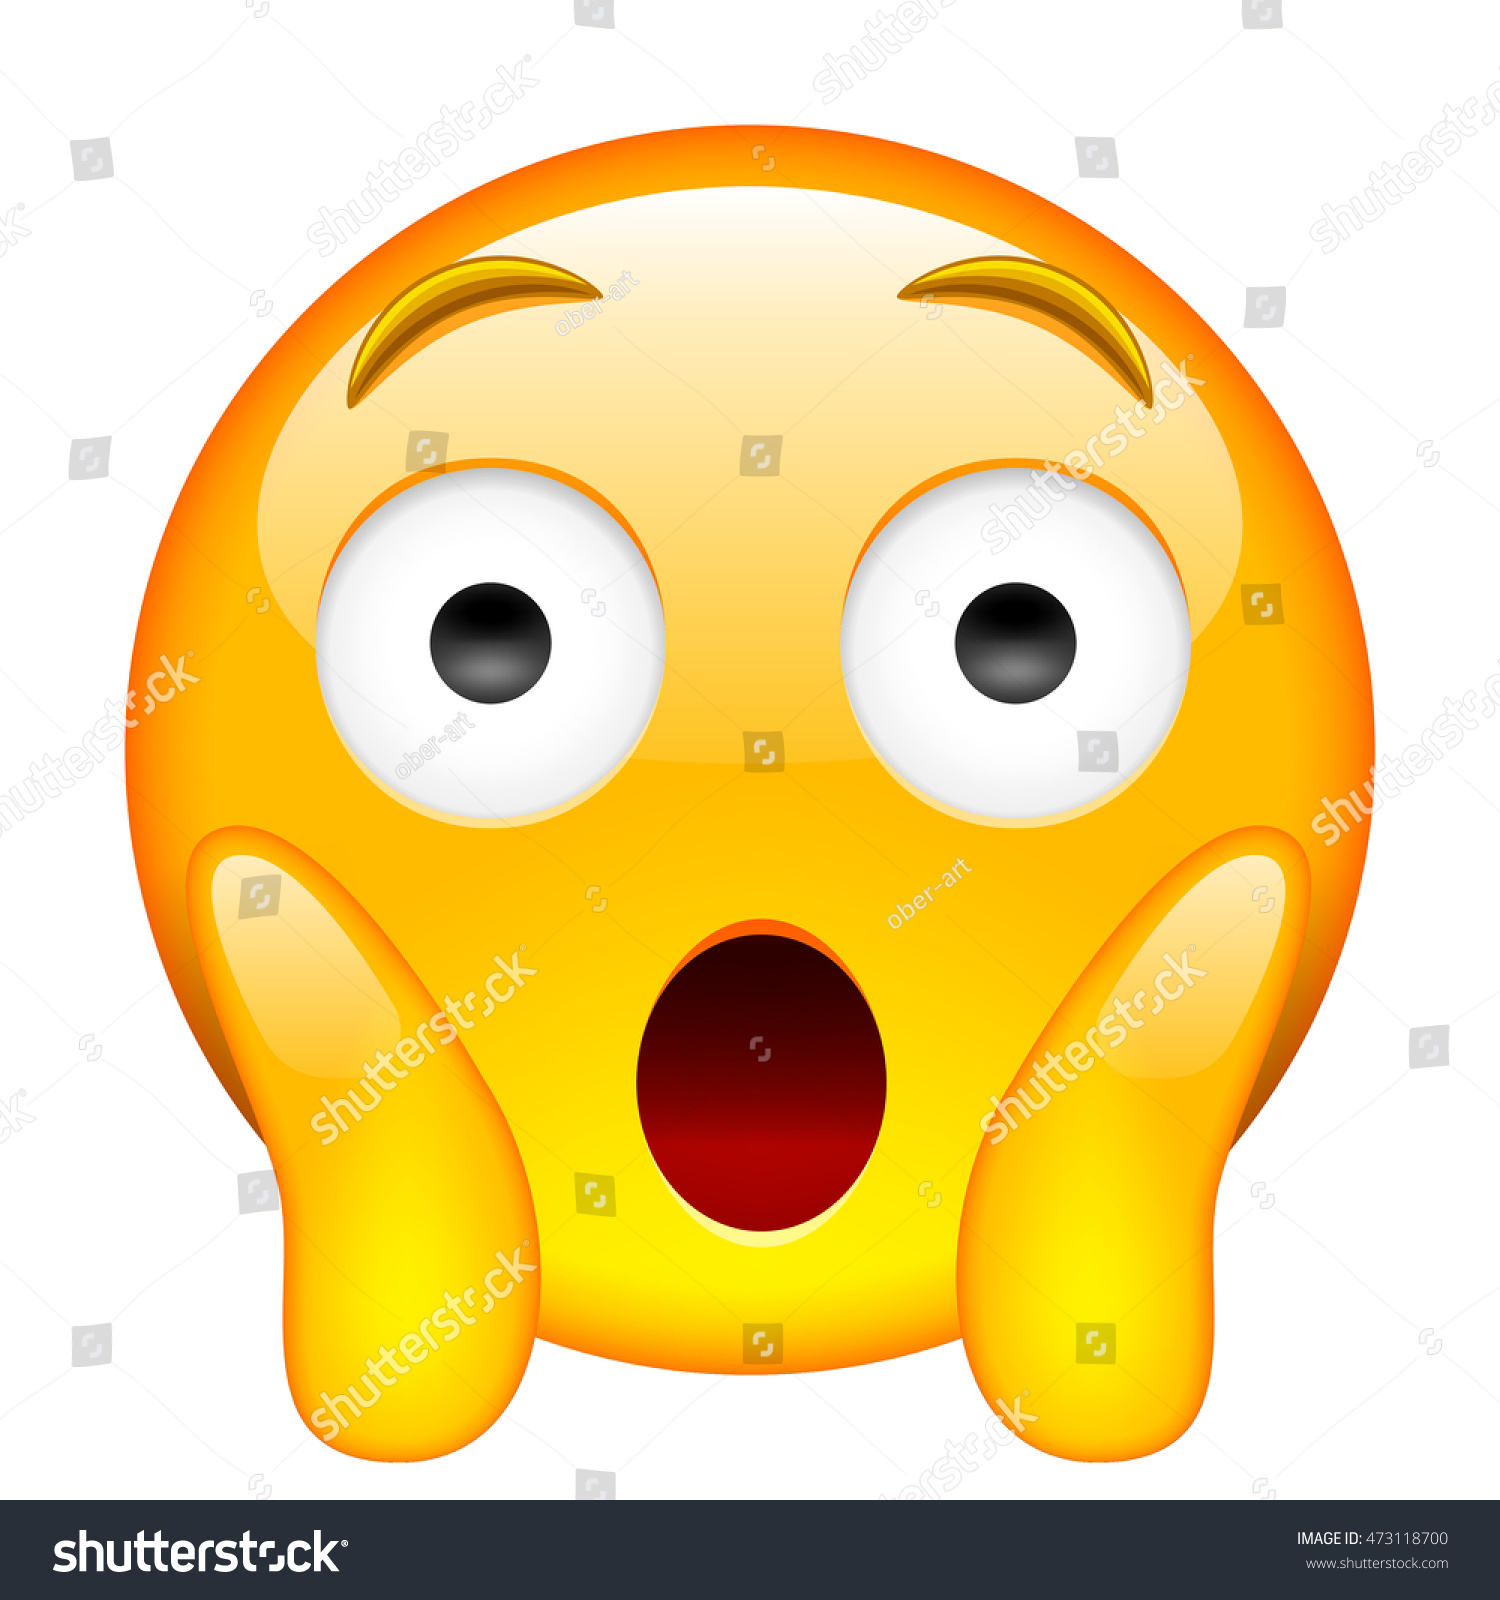 Face Screaming Fear Screaming Fear Emoji Stock Vector 473118700 ...